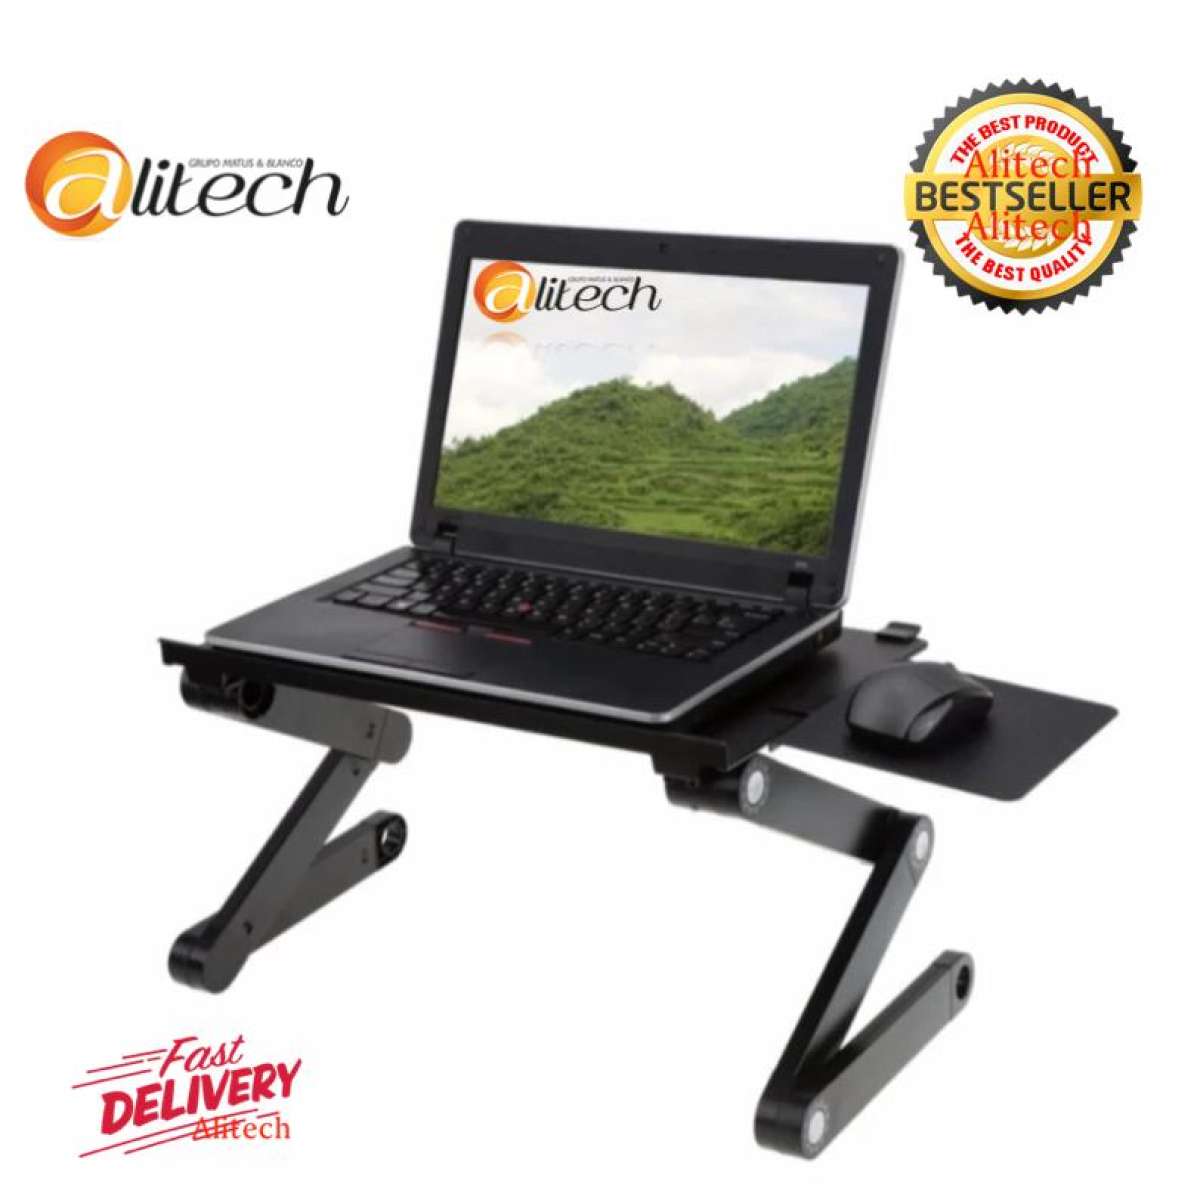 Alitech Moff โต๊ะคอมพิวเตอร์แล็ปท๊อป อเนกประสงค์ Adjustable Laptop Desk for PC Notebook T8 โต๊ะวางโน๊ตบุ๊ค พับได้ ปรับสูงต่ำได้ รุ่น KDO-0006